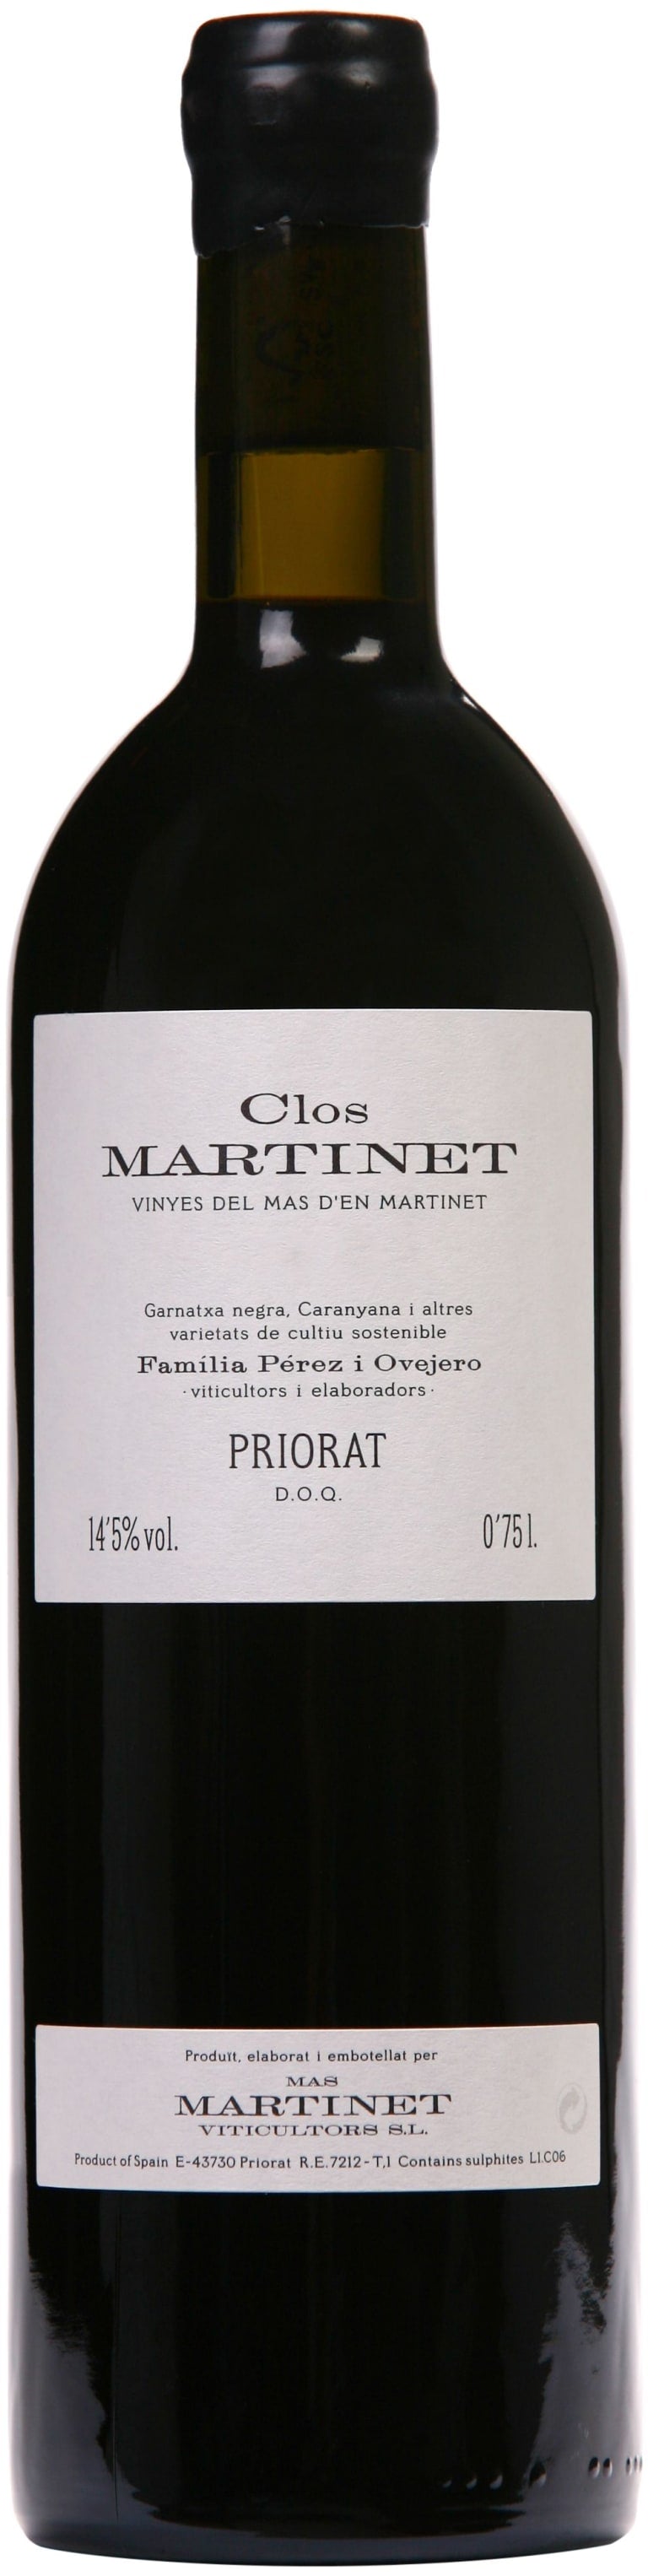 Mas Martinet Clos Martinet Priorat Tinto 2019